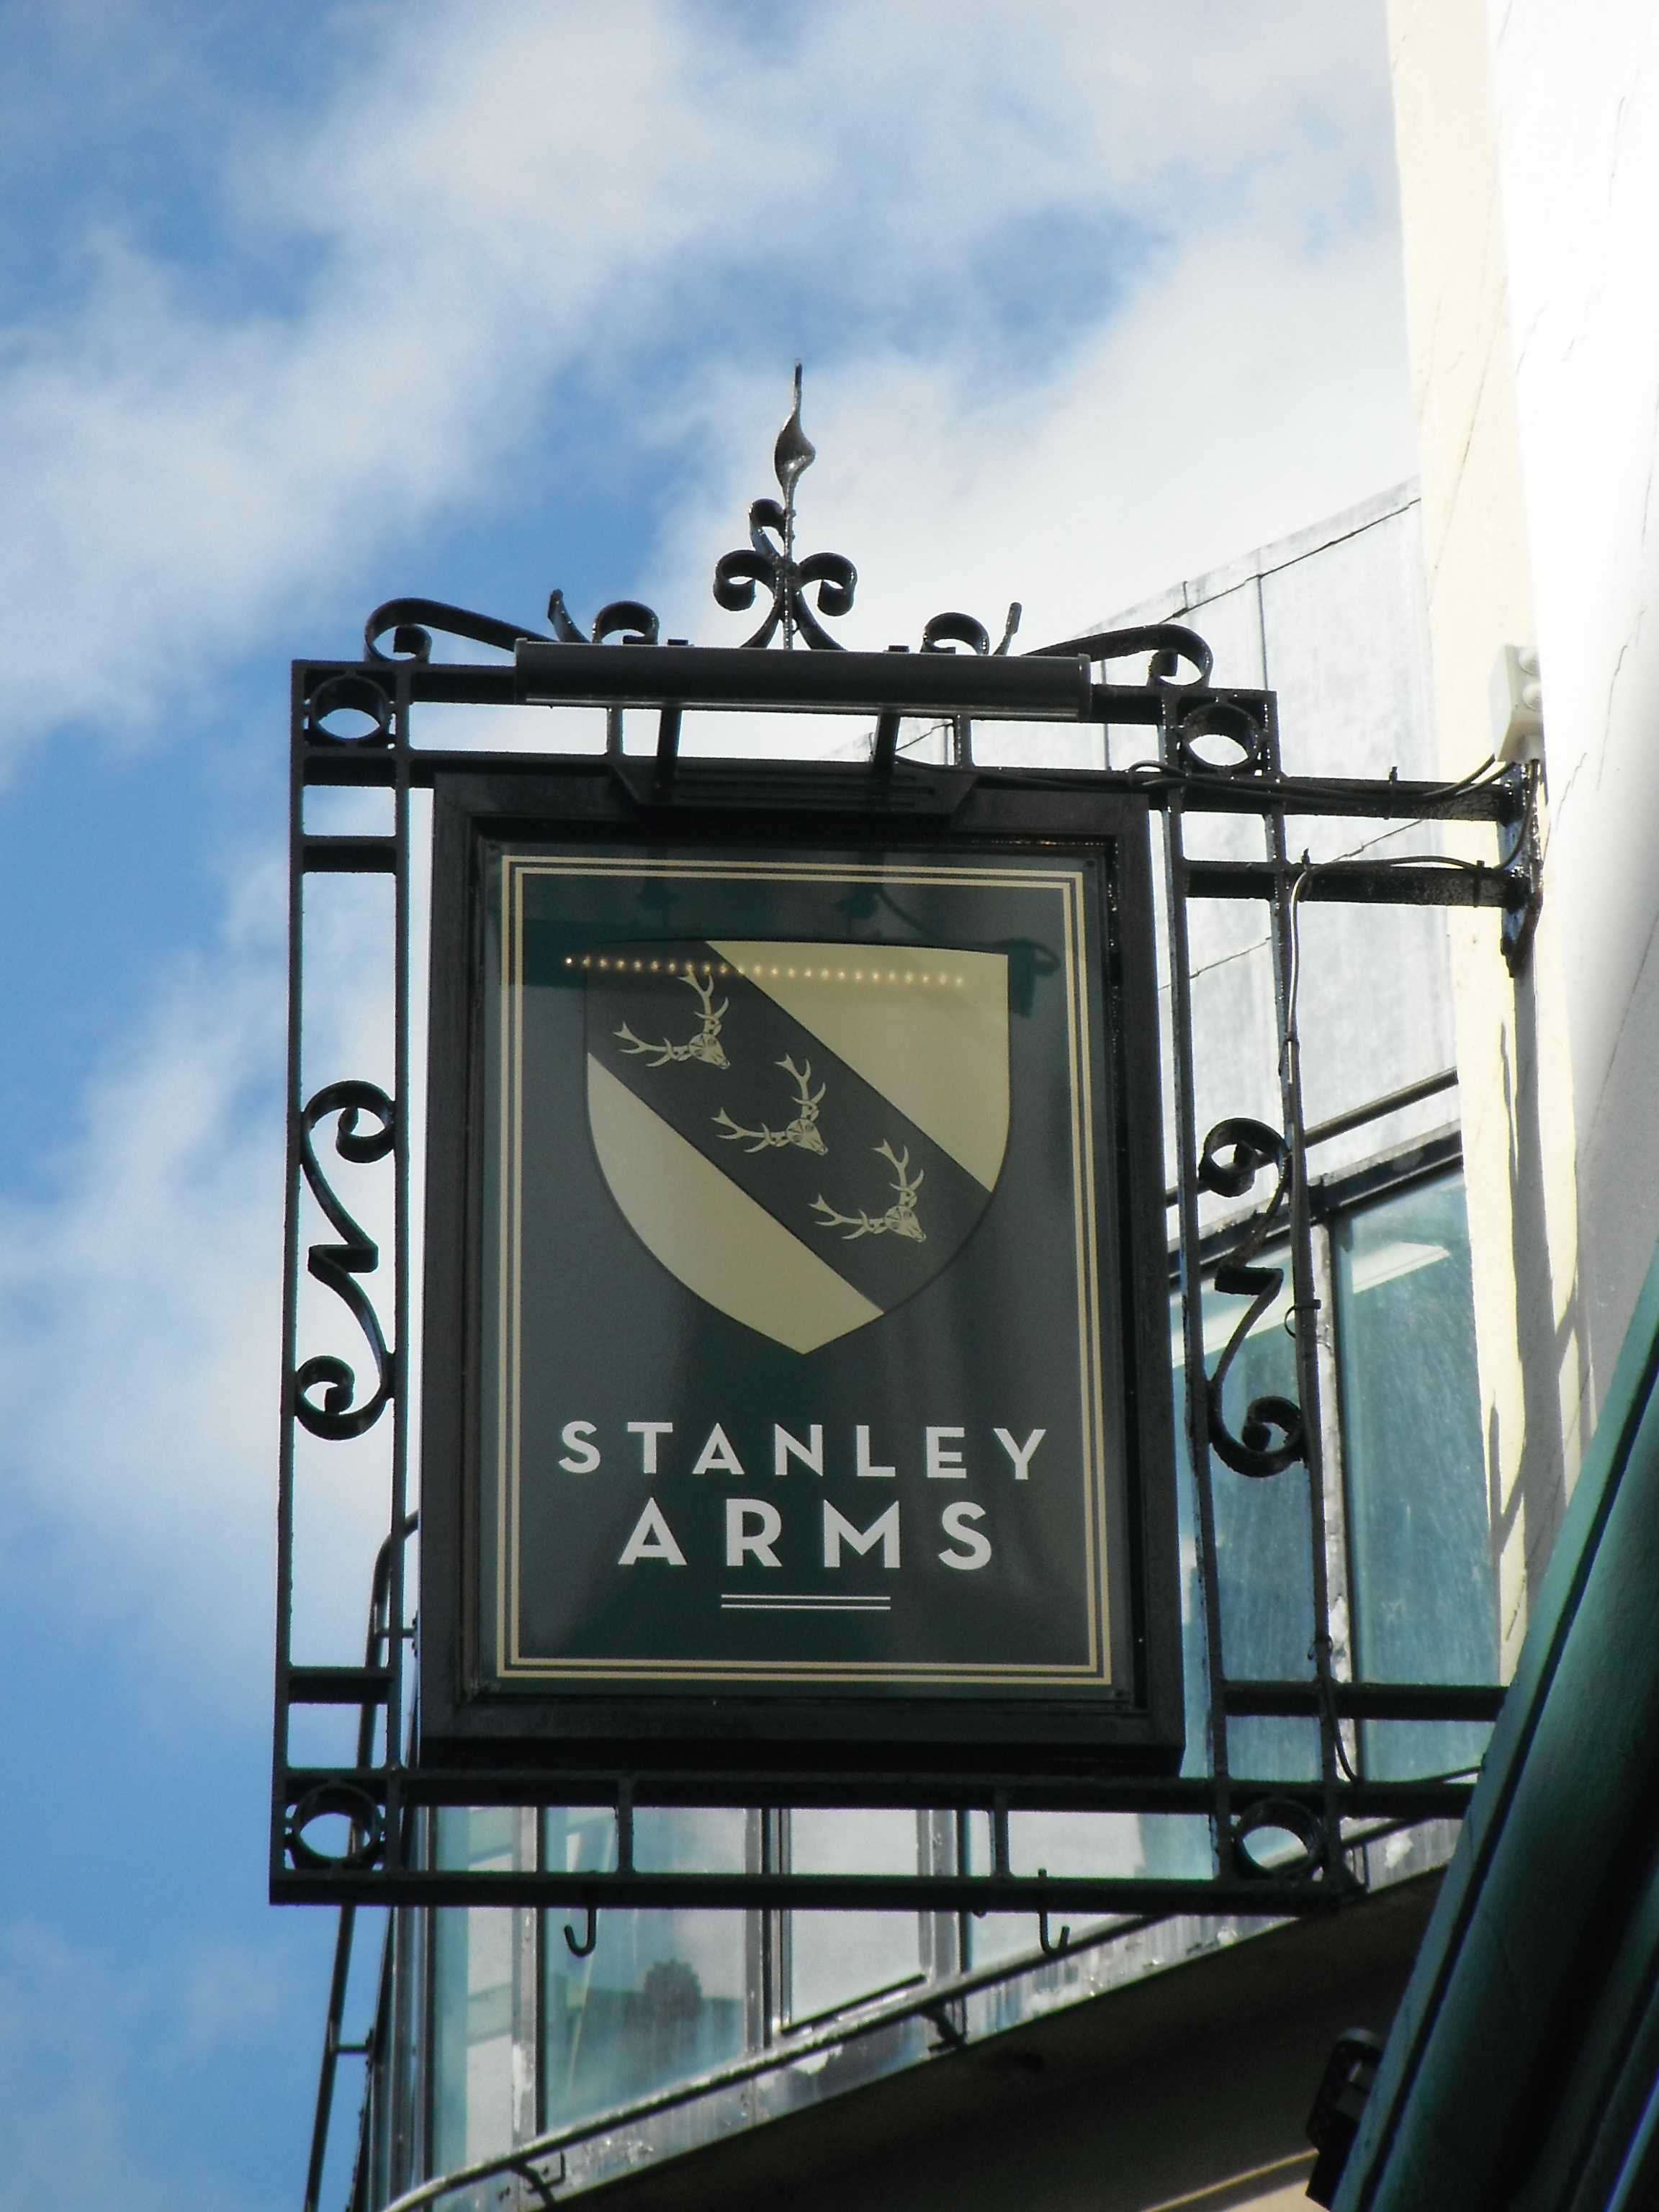 Photo taken by me – The Stanley Arms pub sign, Preston